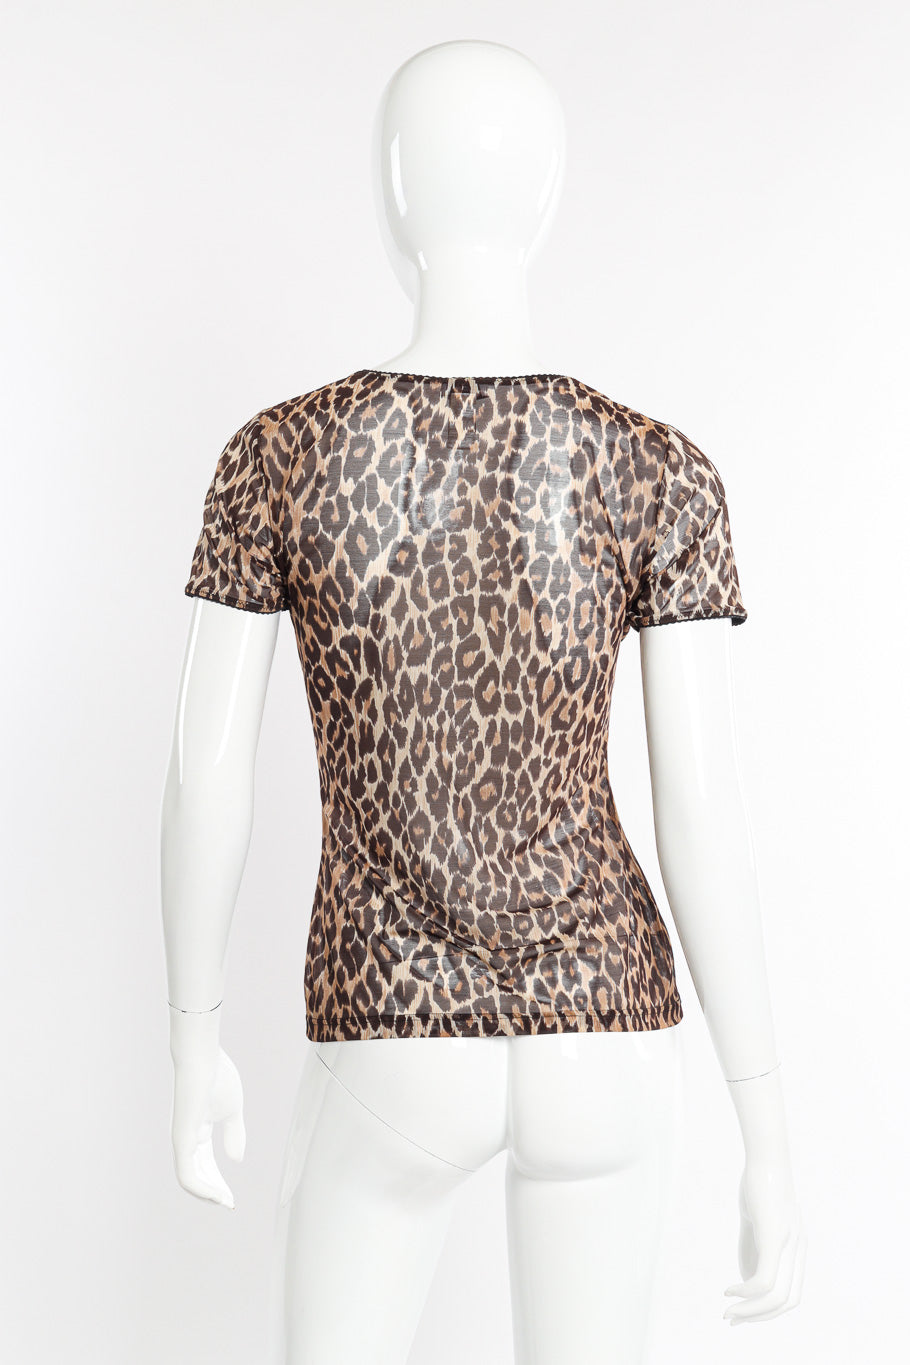 Leopard Mesh Top by Dolce & Gabbana on mannequin back @recessla